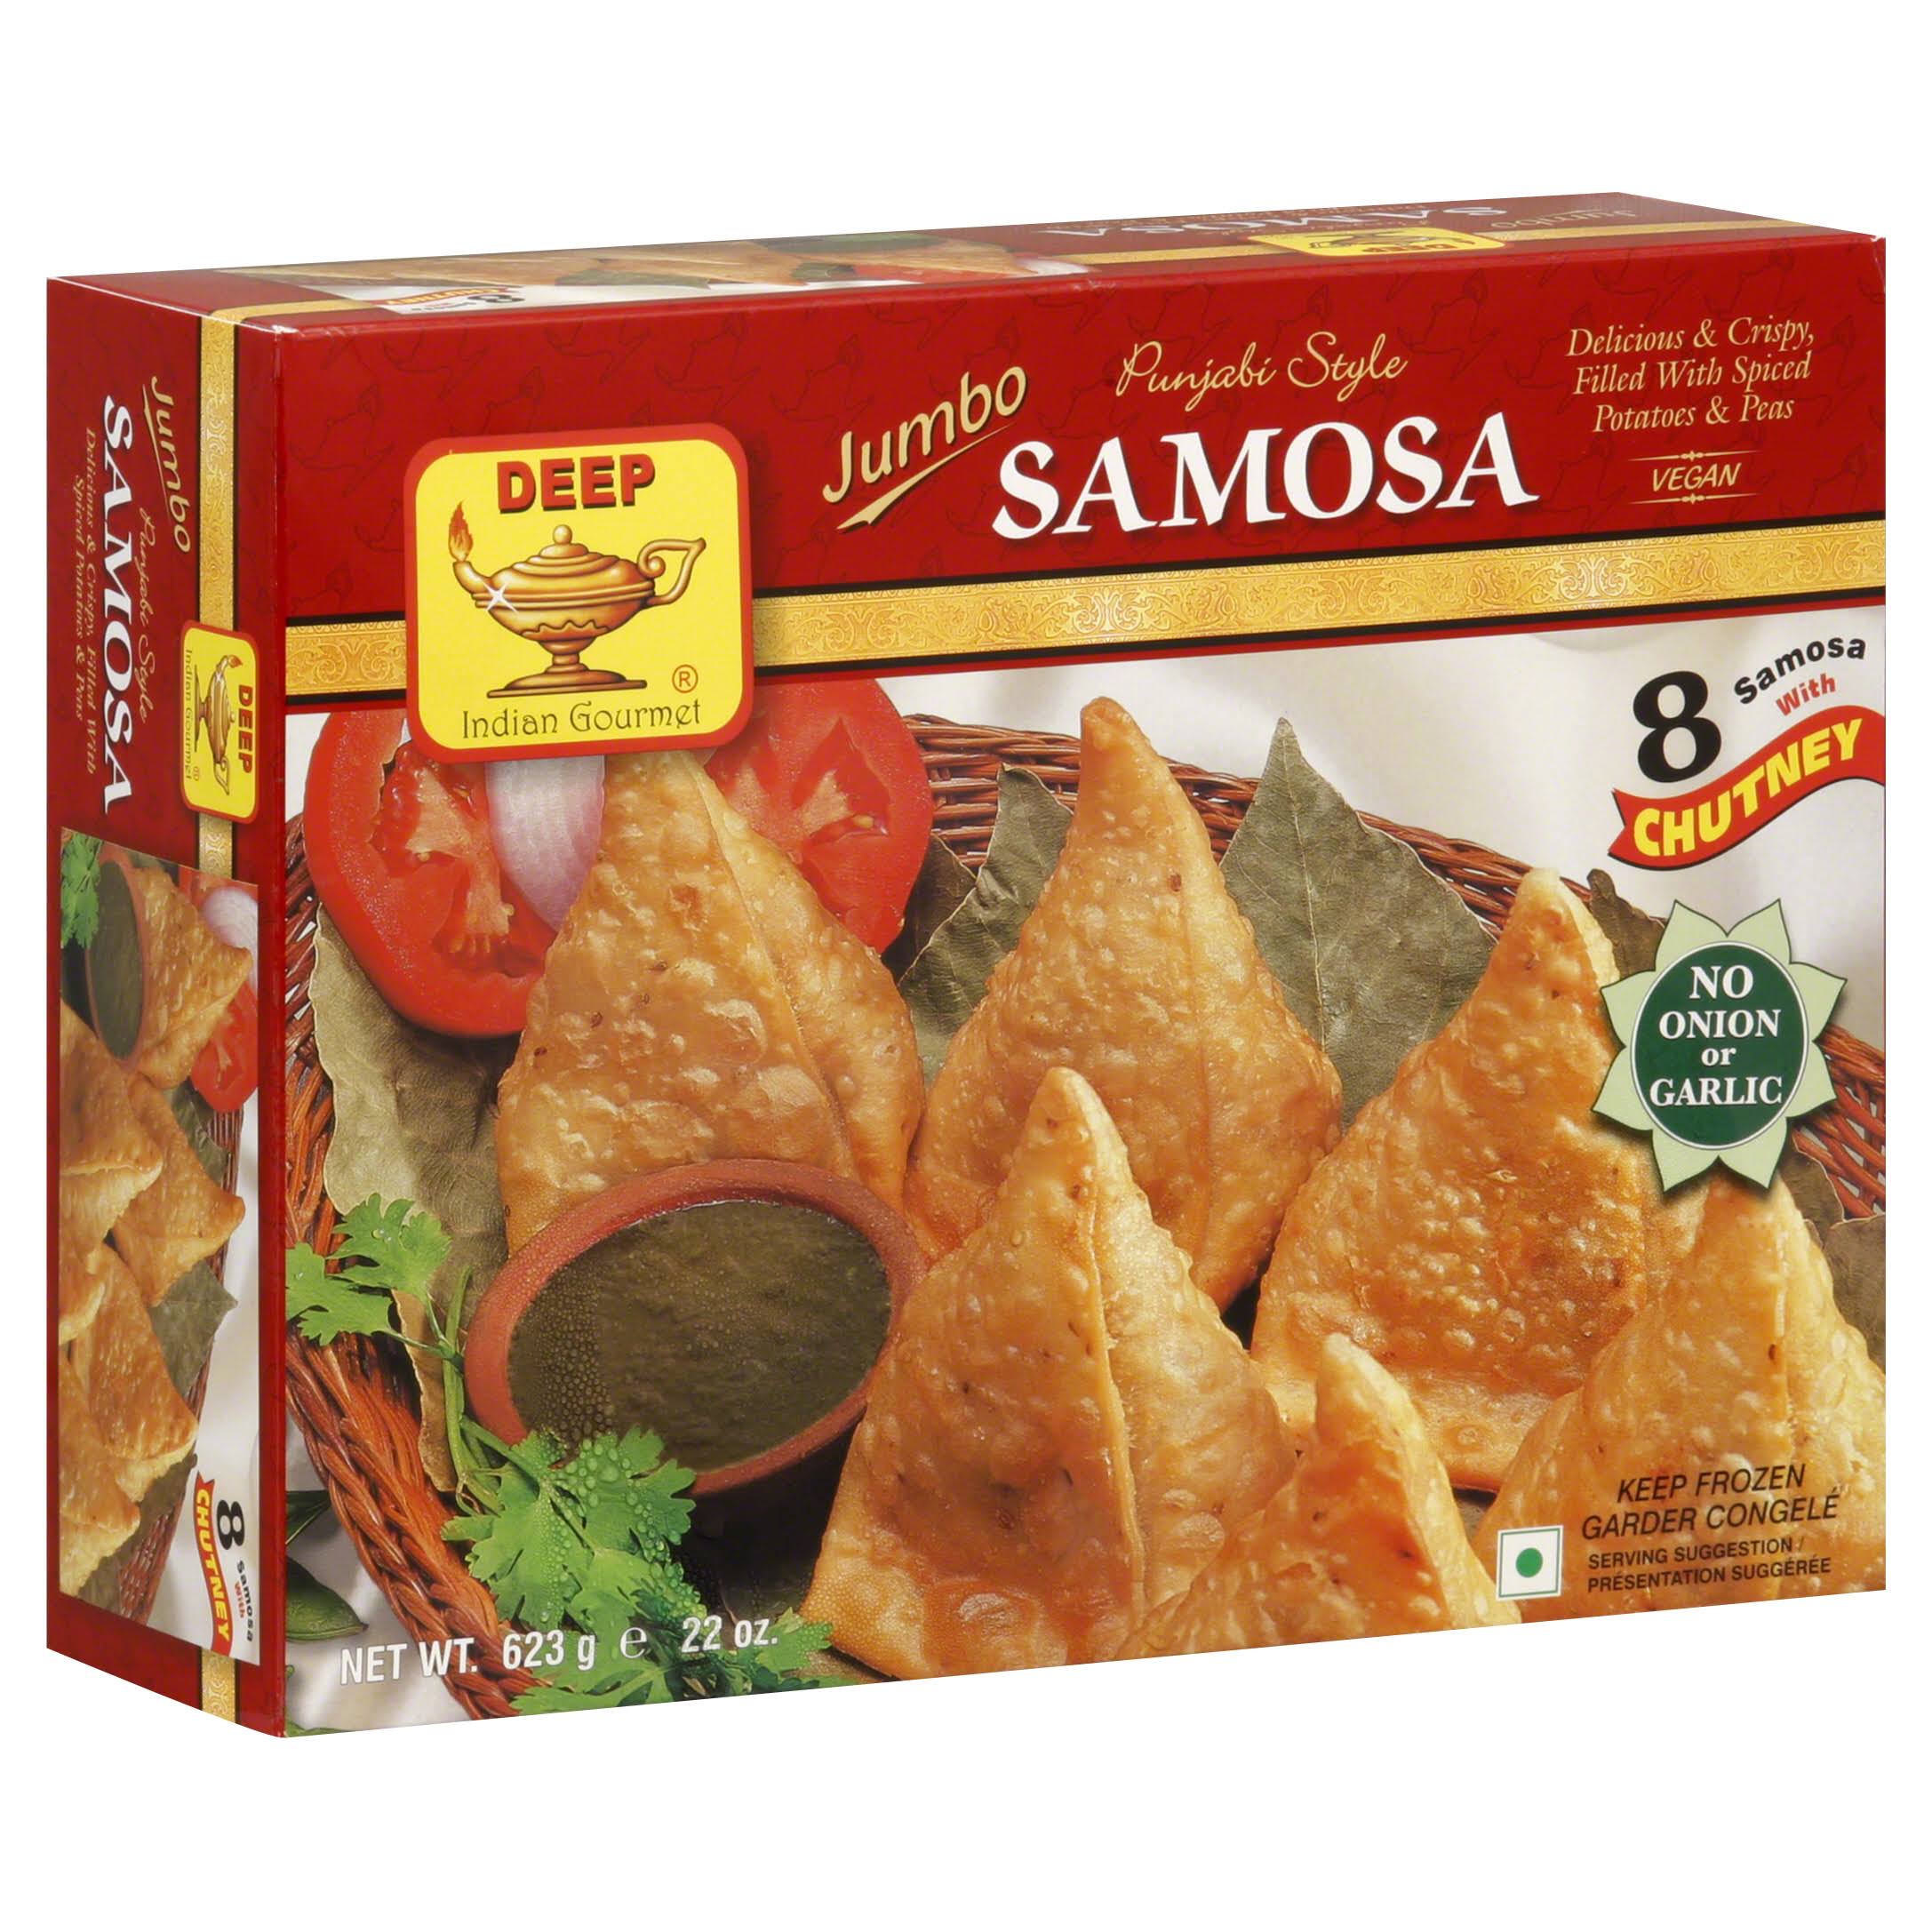 Deep Indian Gourmet Indian Gourmet Samosa, Punjabi Style, with Chutney, Jumbo - 8 samosas, 22 oz